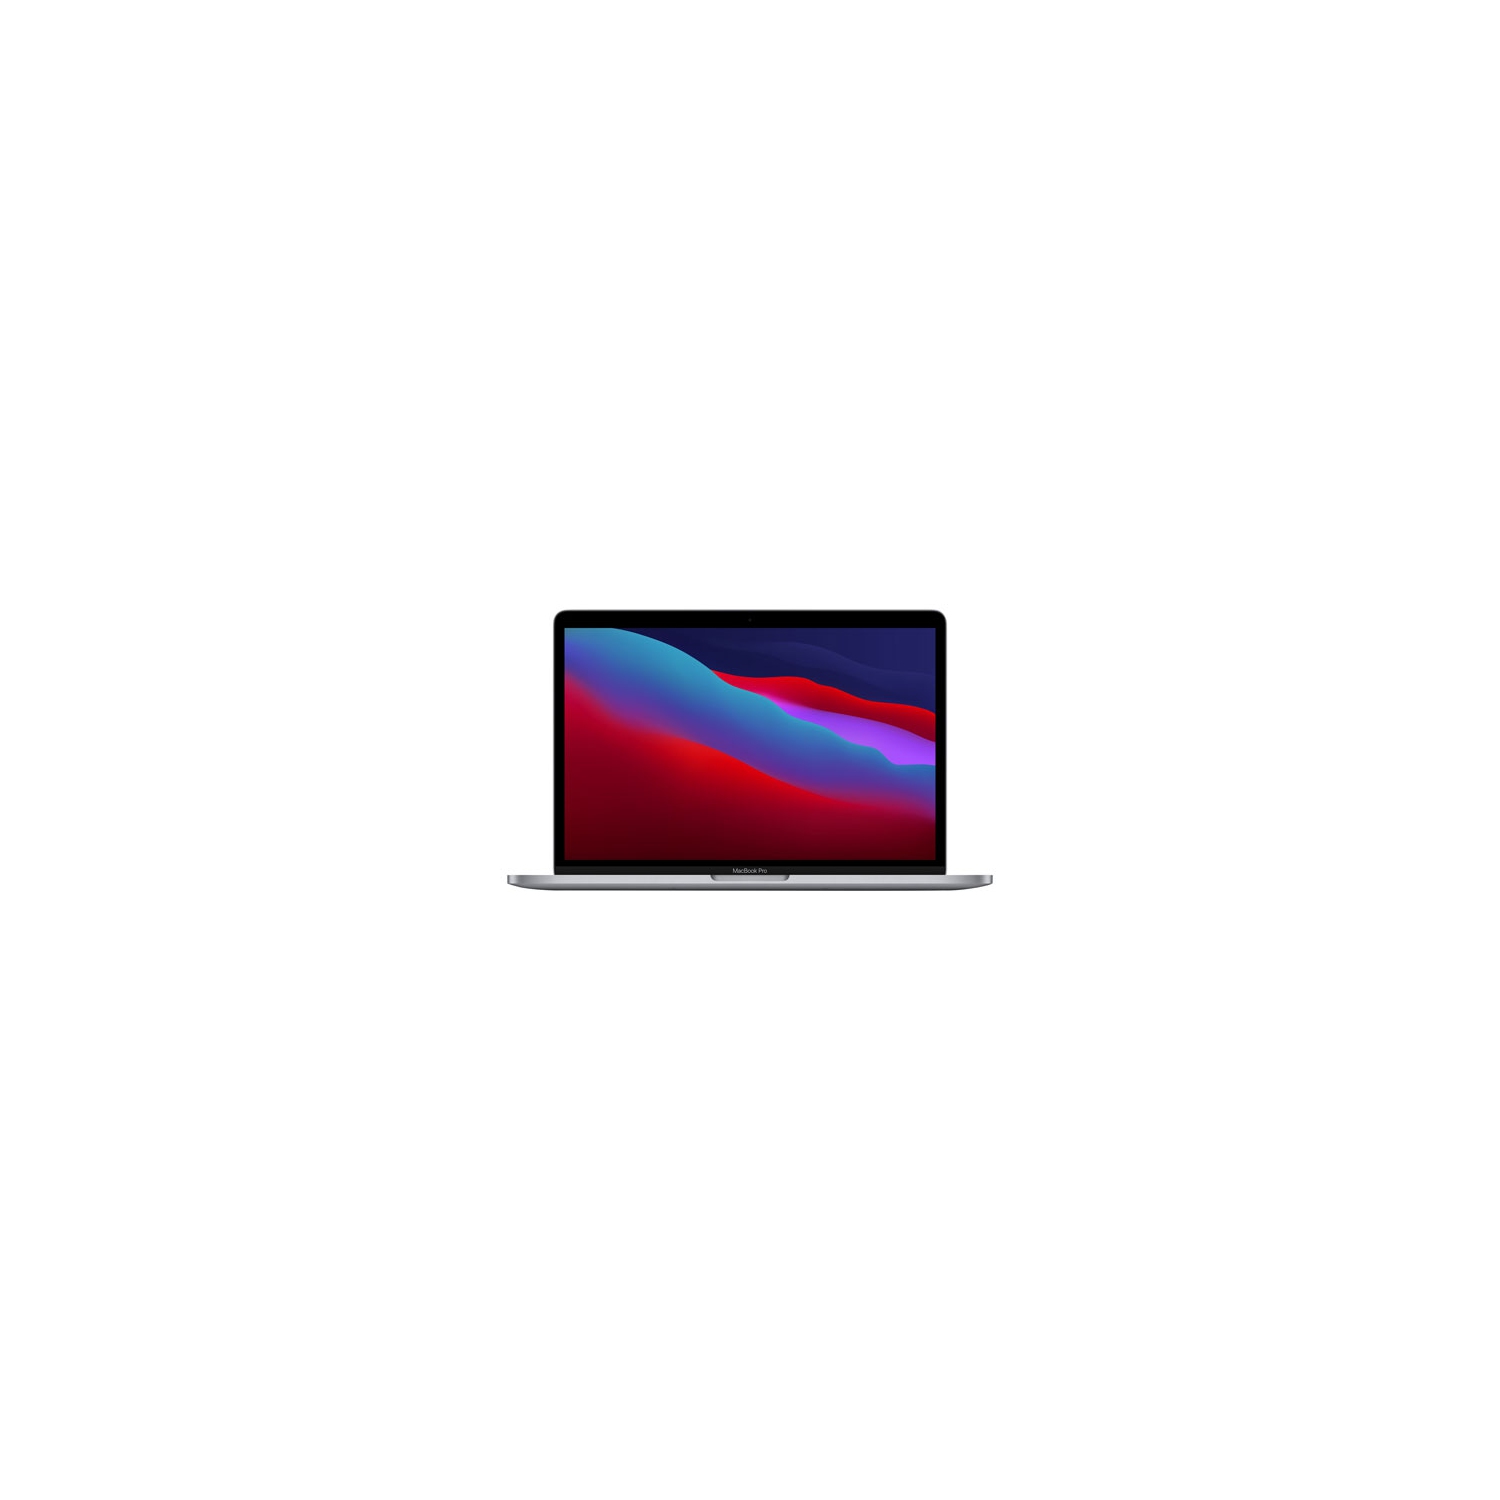 Refurbished (Good) - Apple MacBook Pro 13.3" w/ Touch Bar (Fall 2020) - Space Grey (Apple M1 Chip / 256GB SSD / 8GB RAM) - En